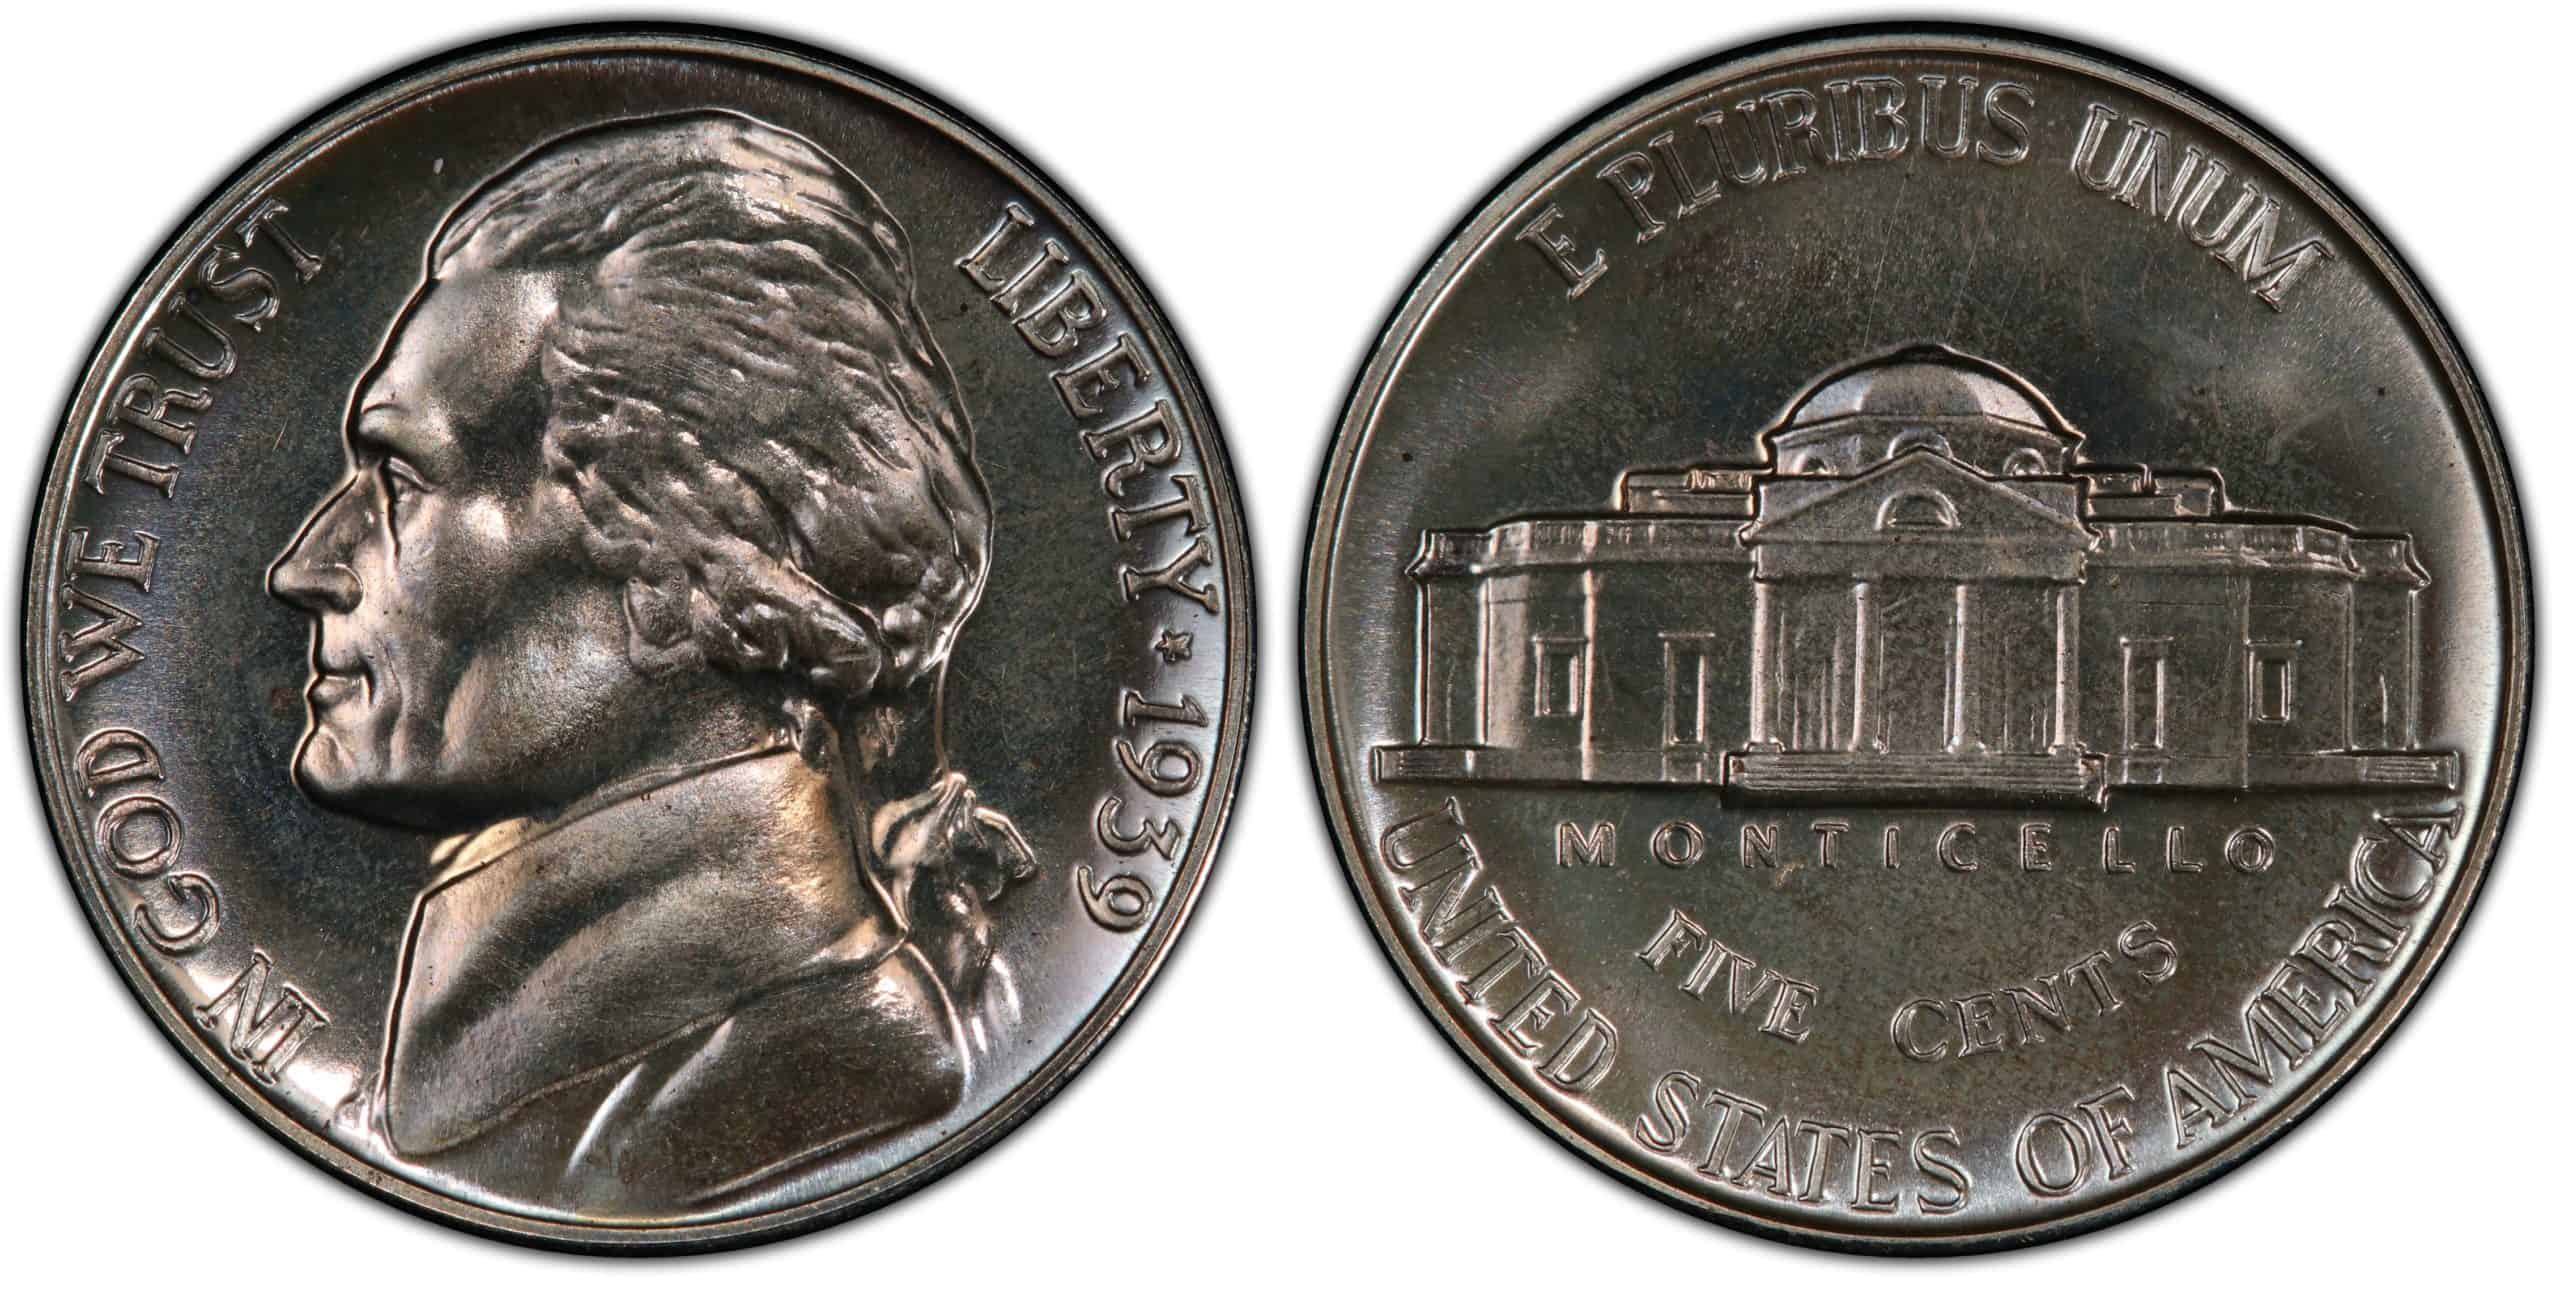 1939 proof Jefferson nickel